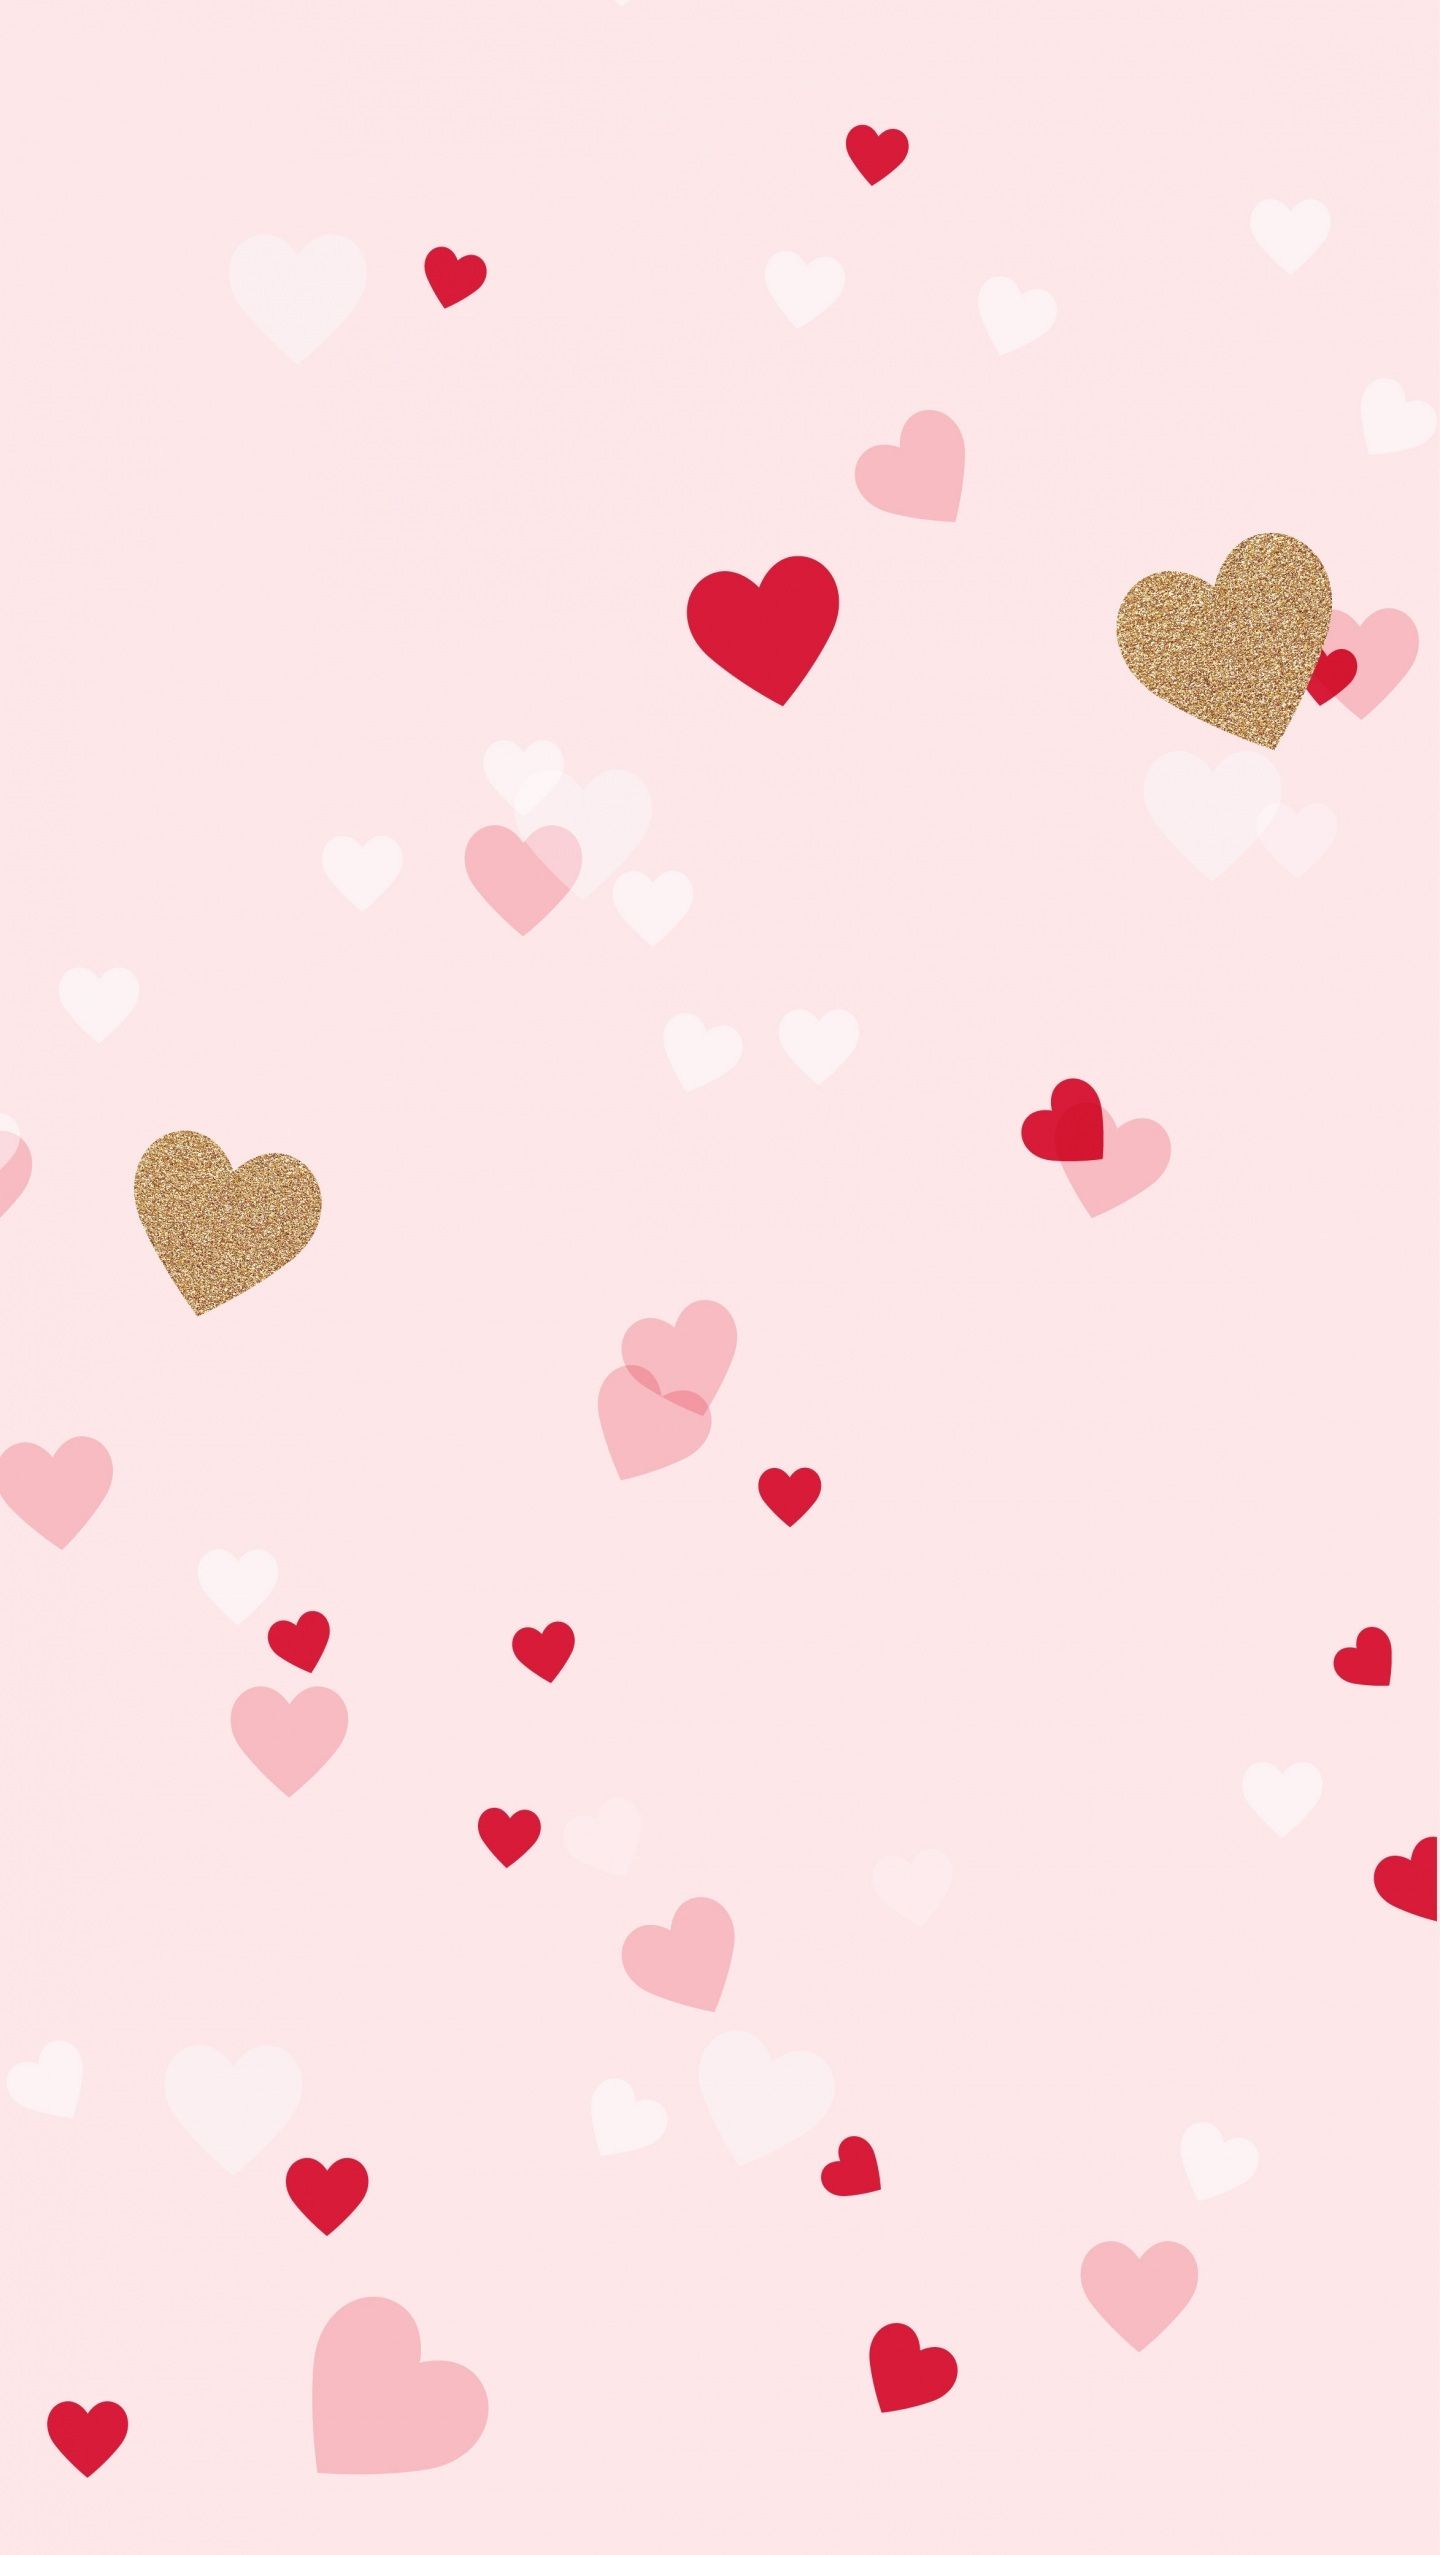 Cute Heart Wallpaper For iPhone